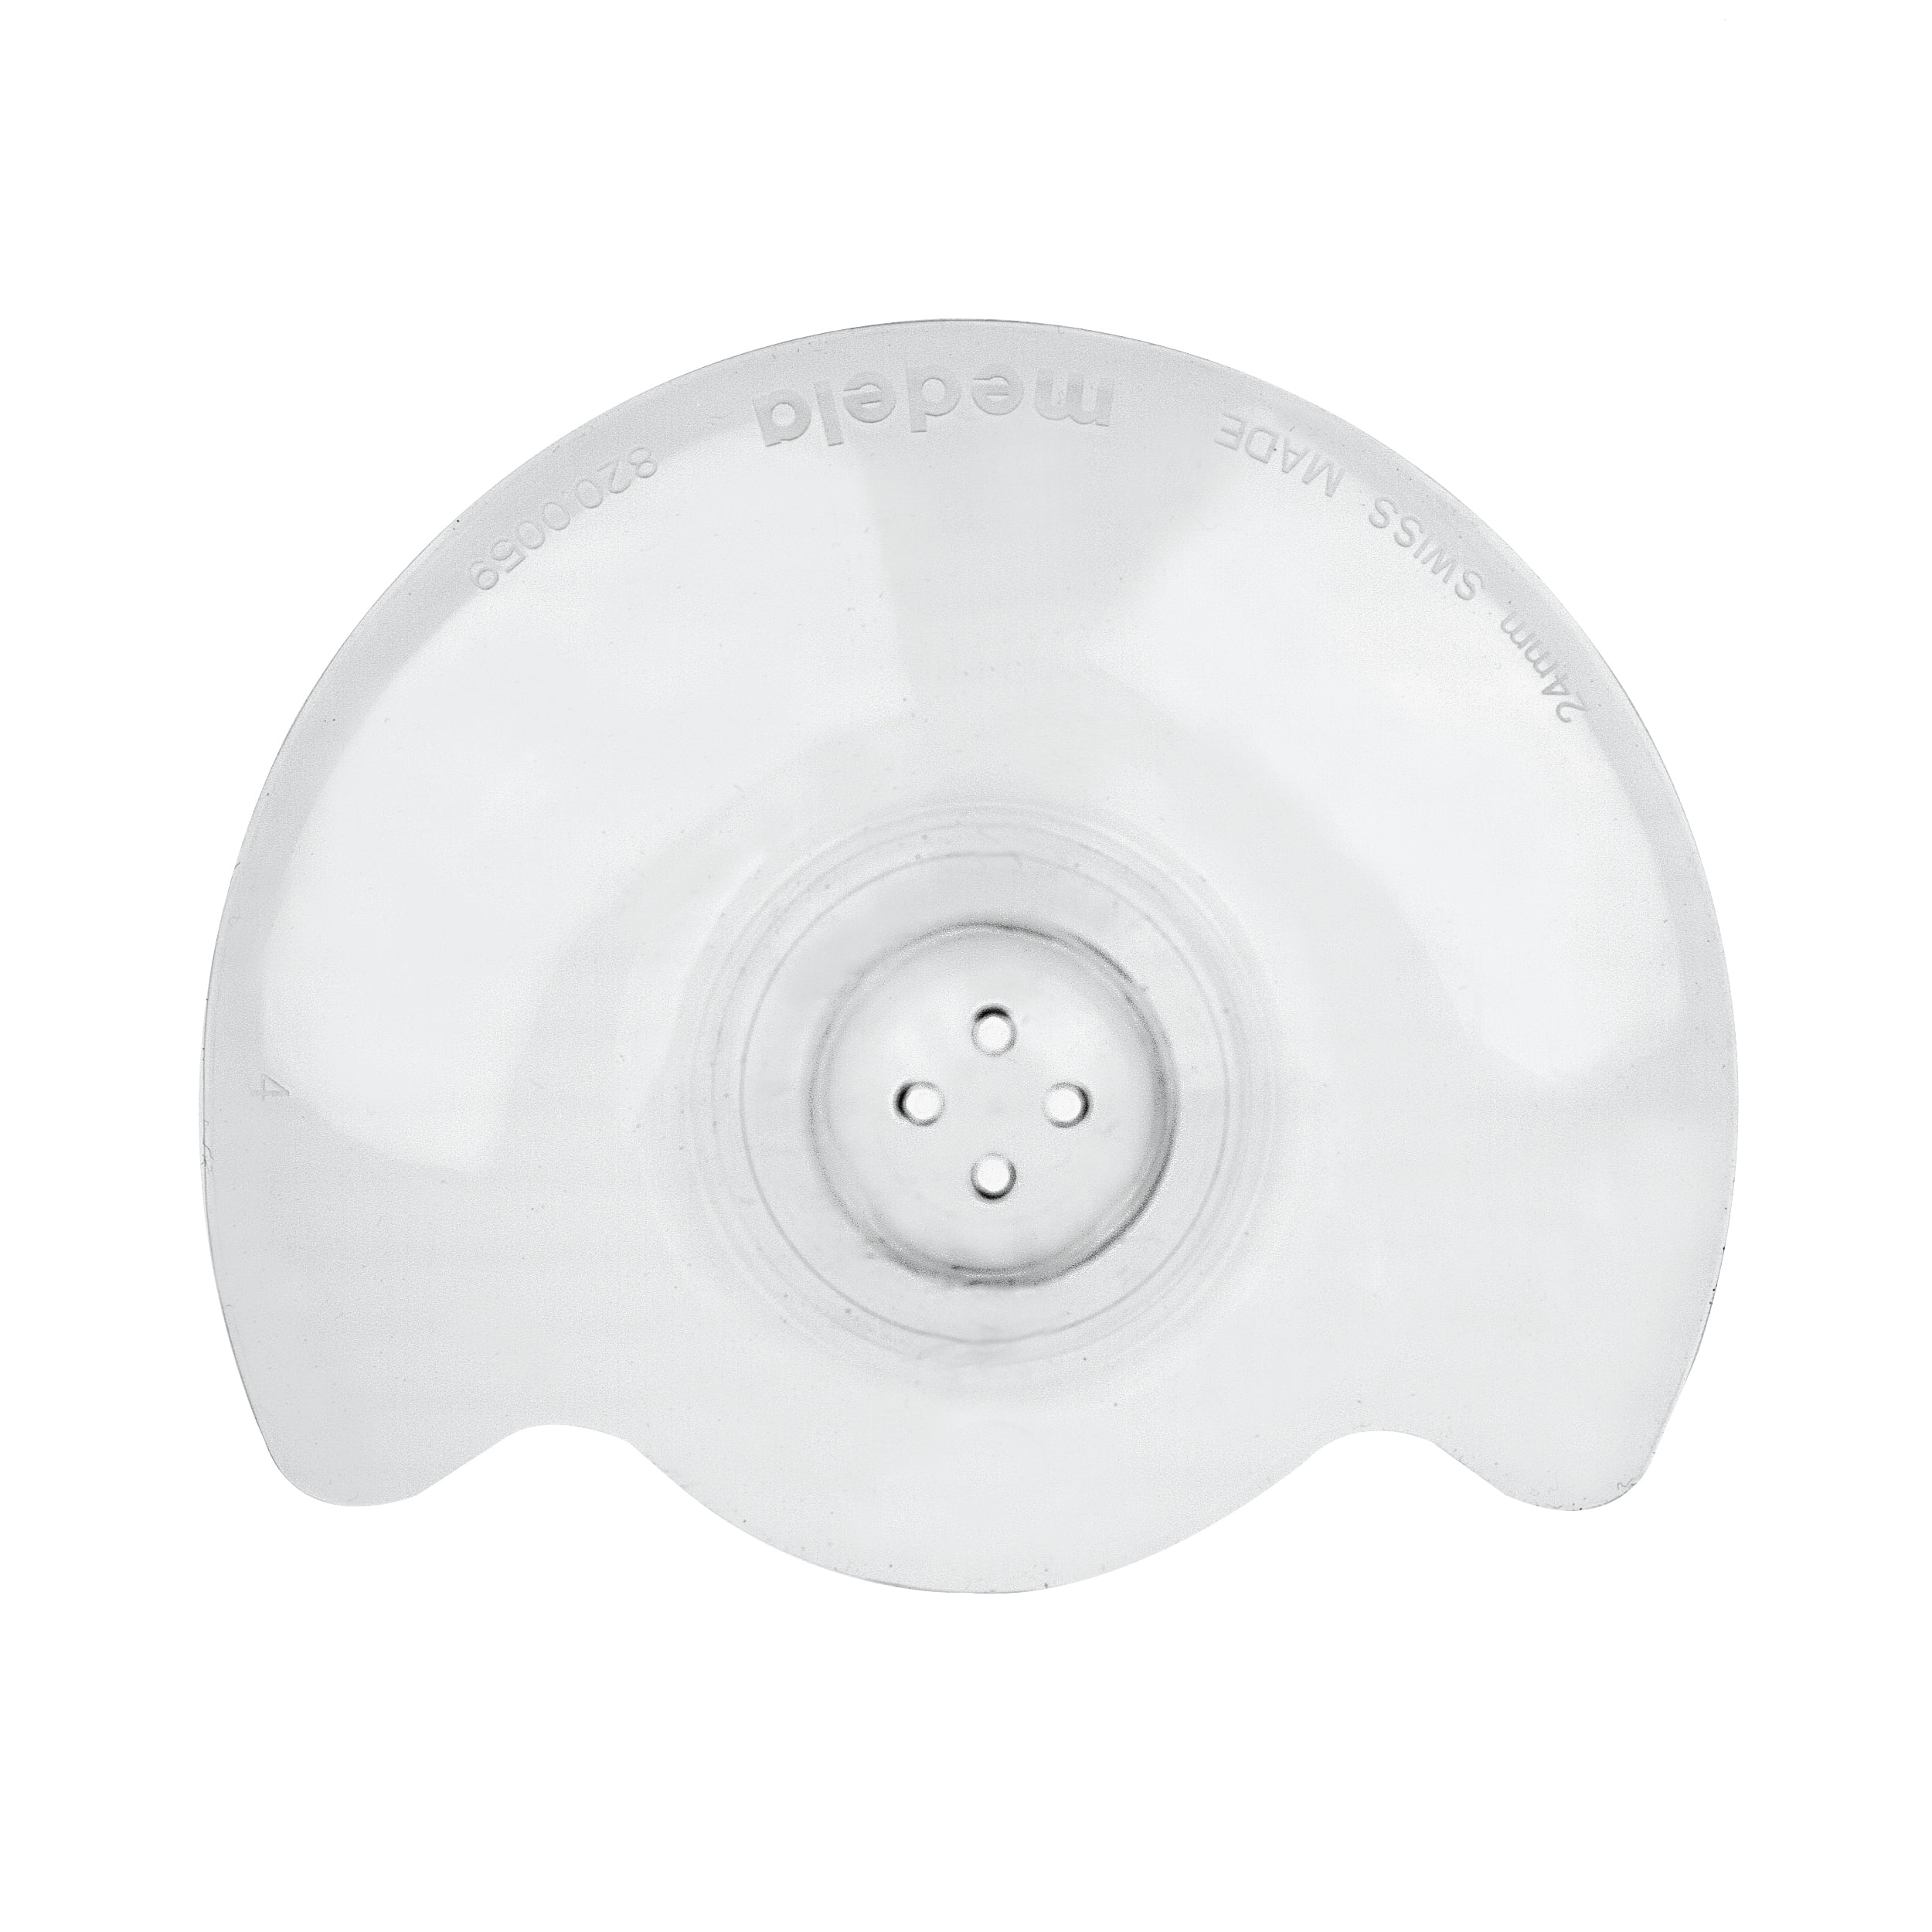 Medela Contact Nipple Shields, 24mm, Silicone, DEHP & BPA Free, Clear,  67203NA, 1 Each 